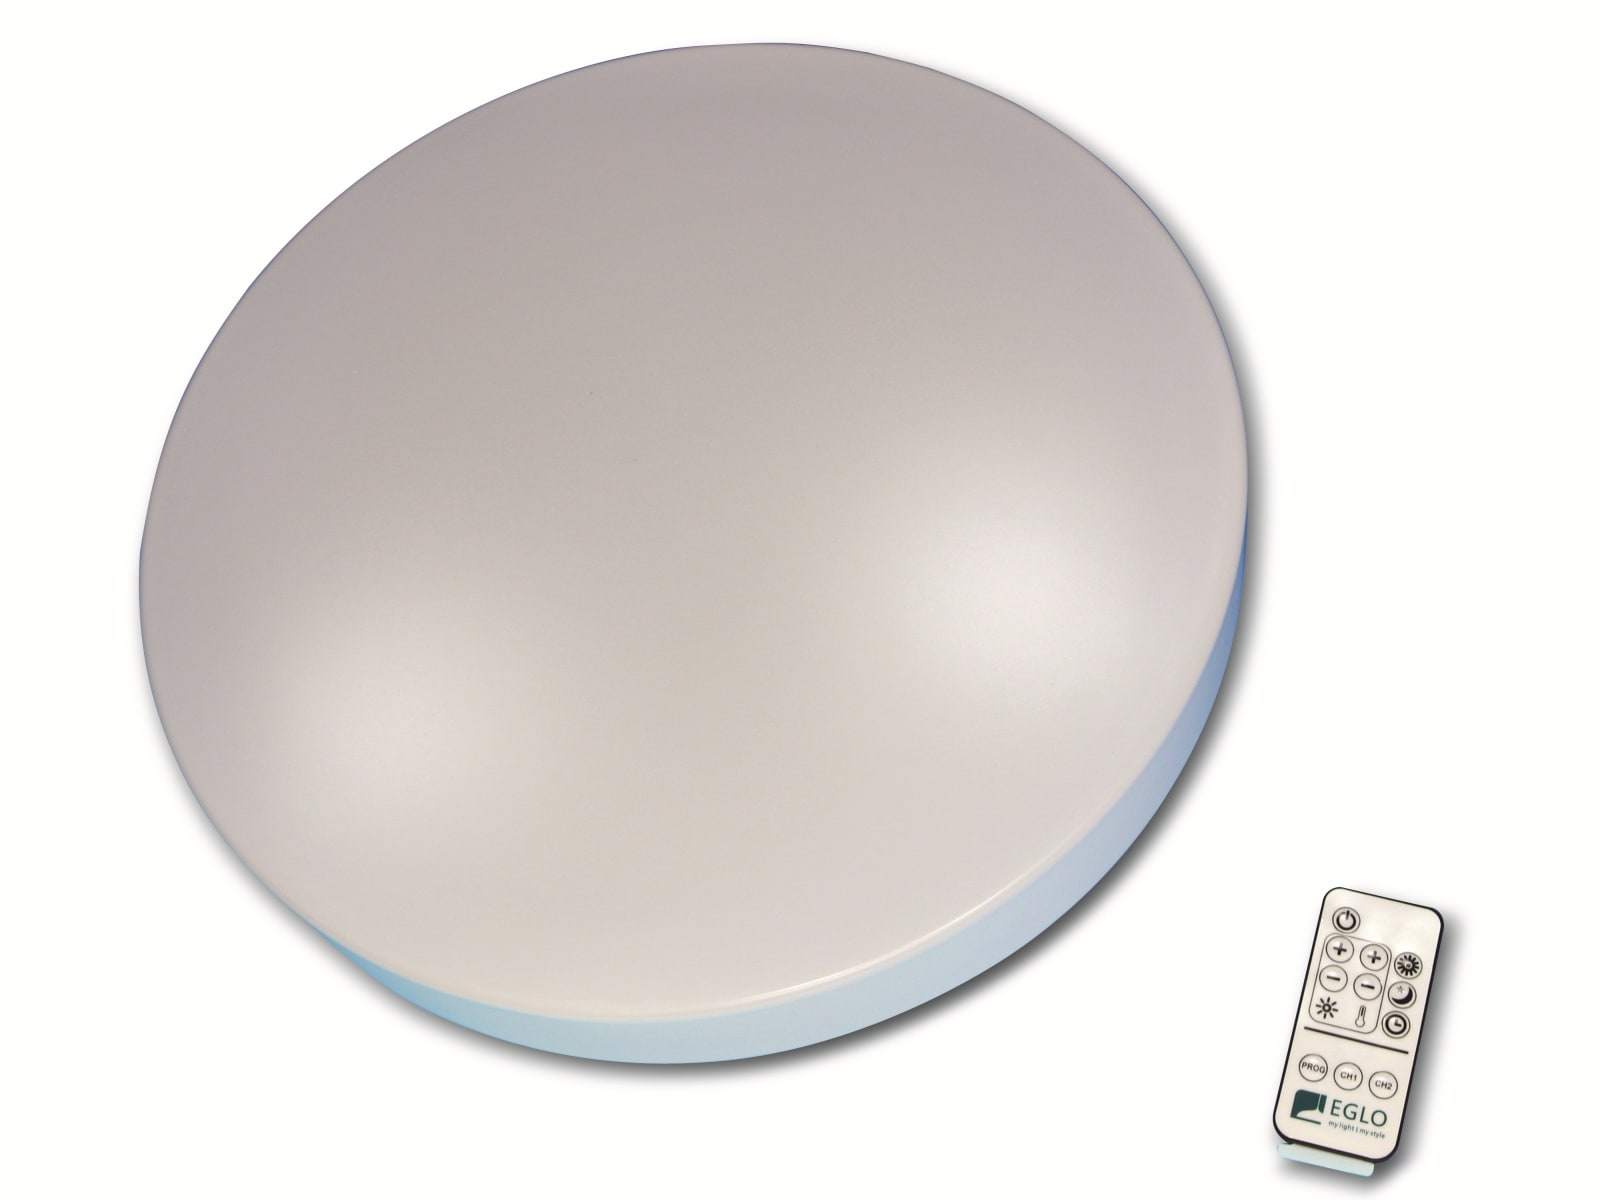 EGLO LED-Deckenleuchte BERAMO 93633, 15,6 W, 1500 lm, 2700K…5000K, inkl. Fernbedienung